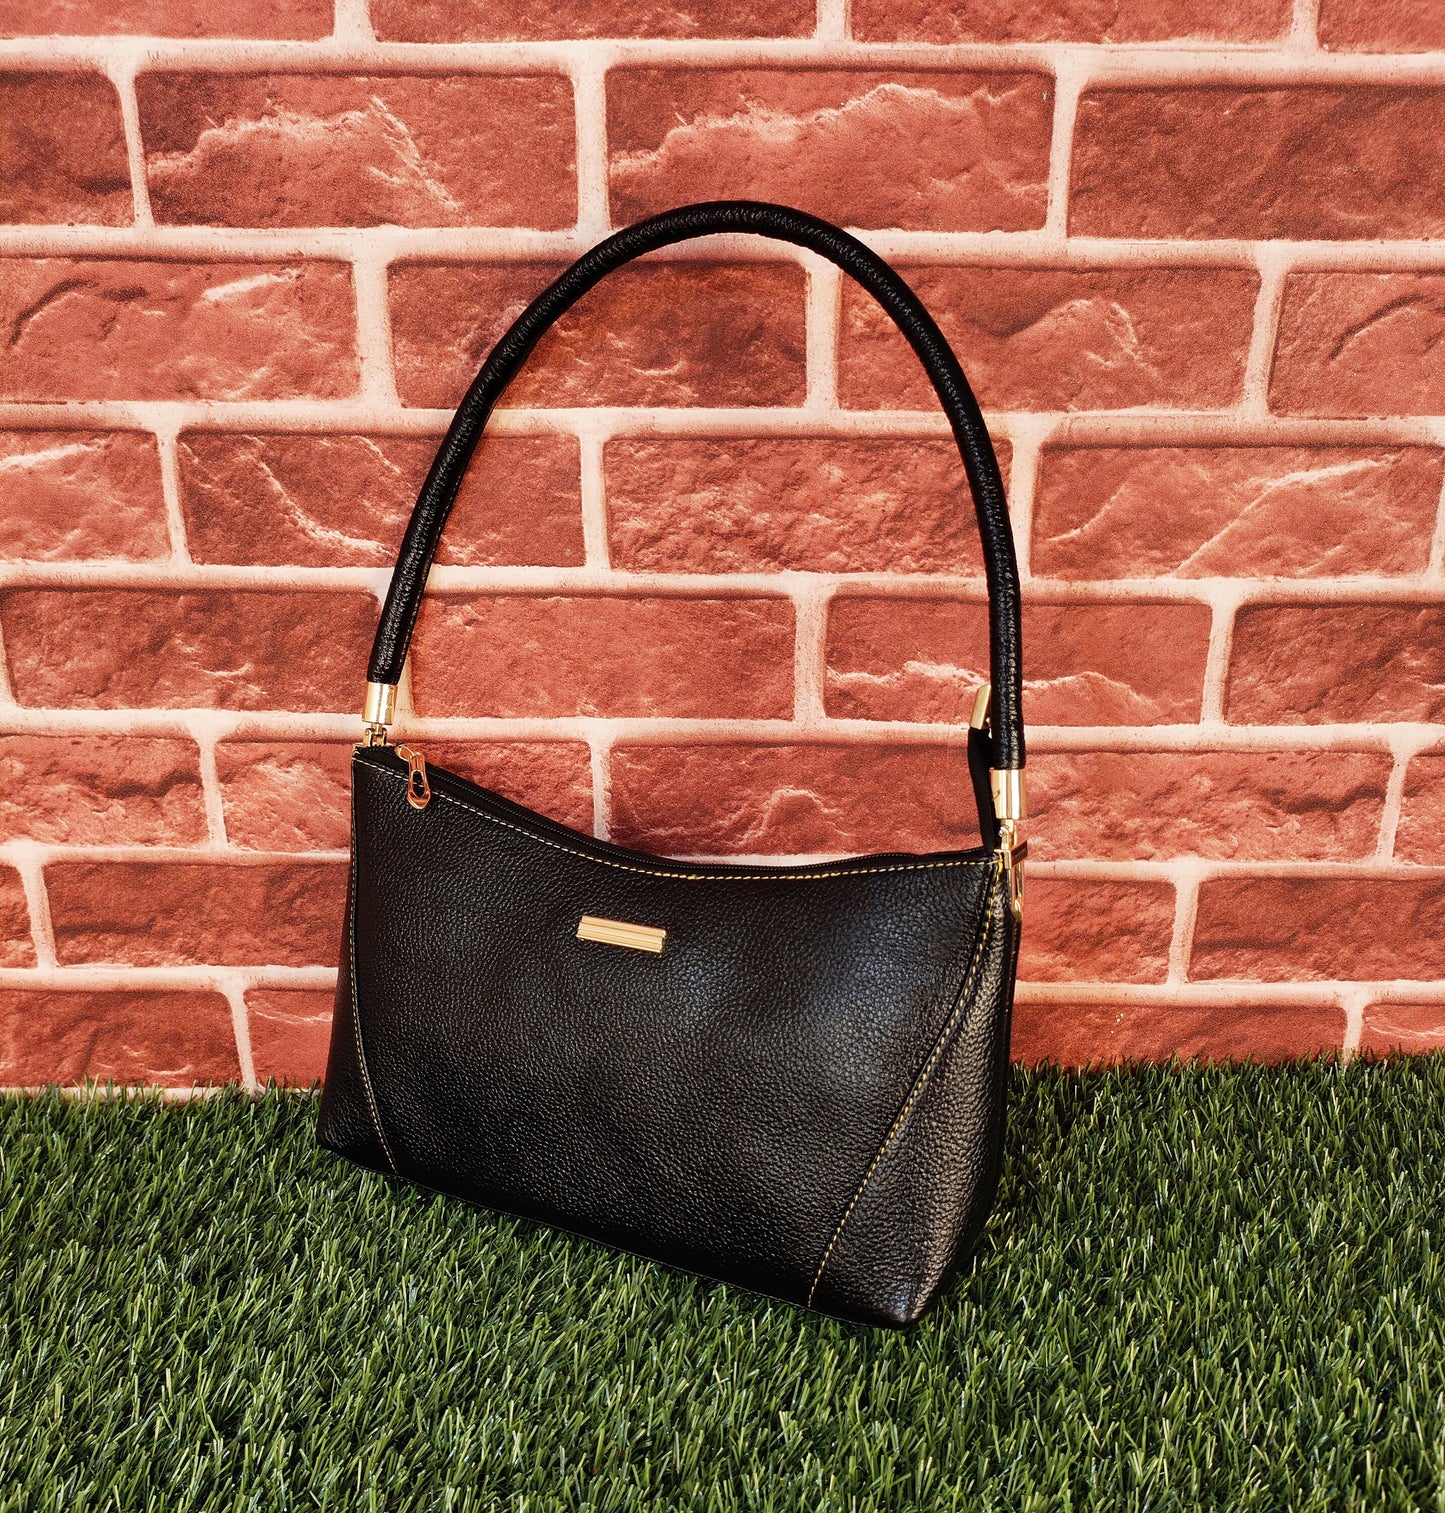 Black Leather Hobo Bag for Women's Leather Shoulder Bag, Shoulder Purse, Soft Leather Bag, Every Day Bag for Girls, Party Bag, Gift for Her